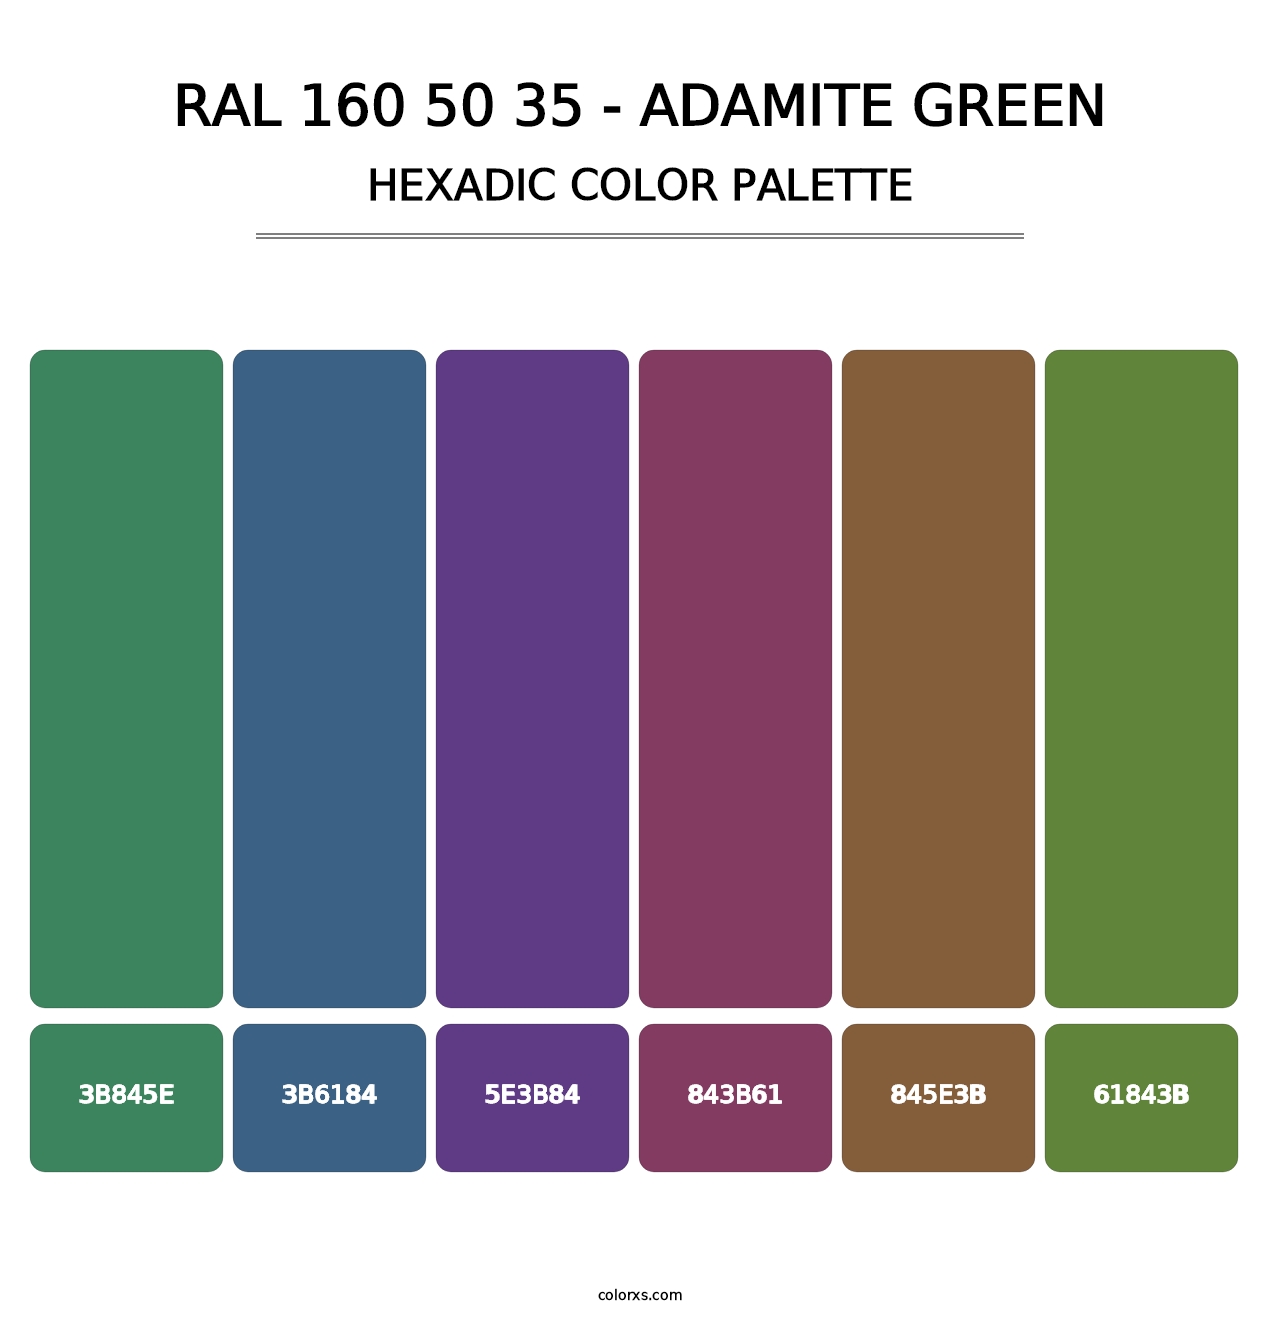 RAL 160 50 35 - Adamite Green - Hexadic Color Palette